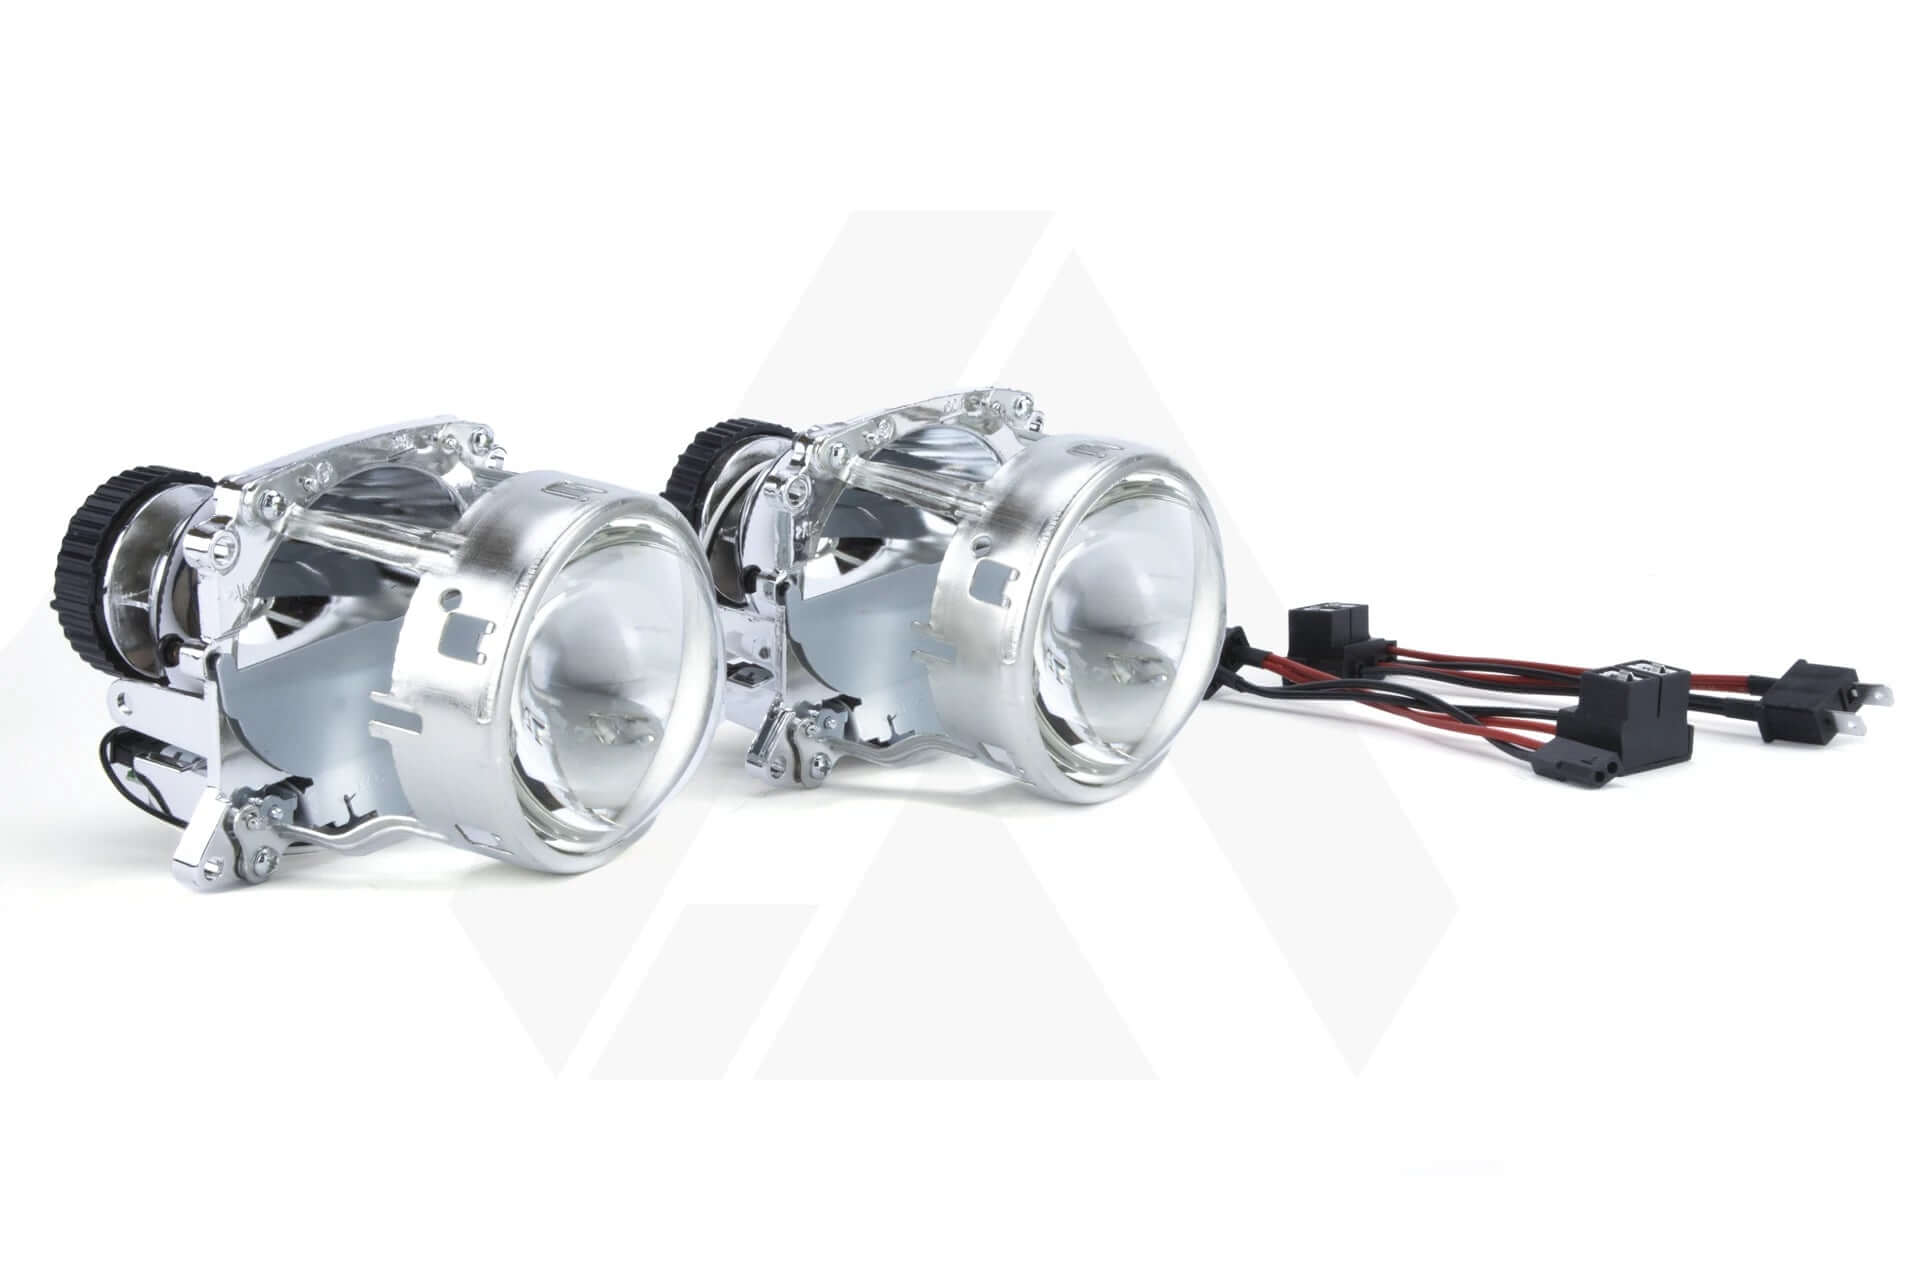 BMW X3 E83 headlight repair & upgrade kits HID xenon LED